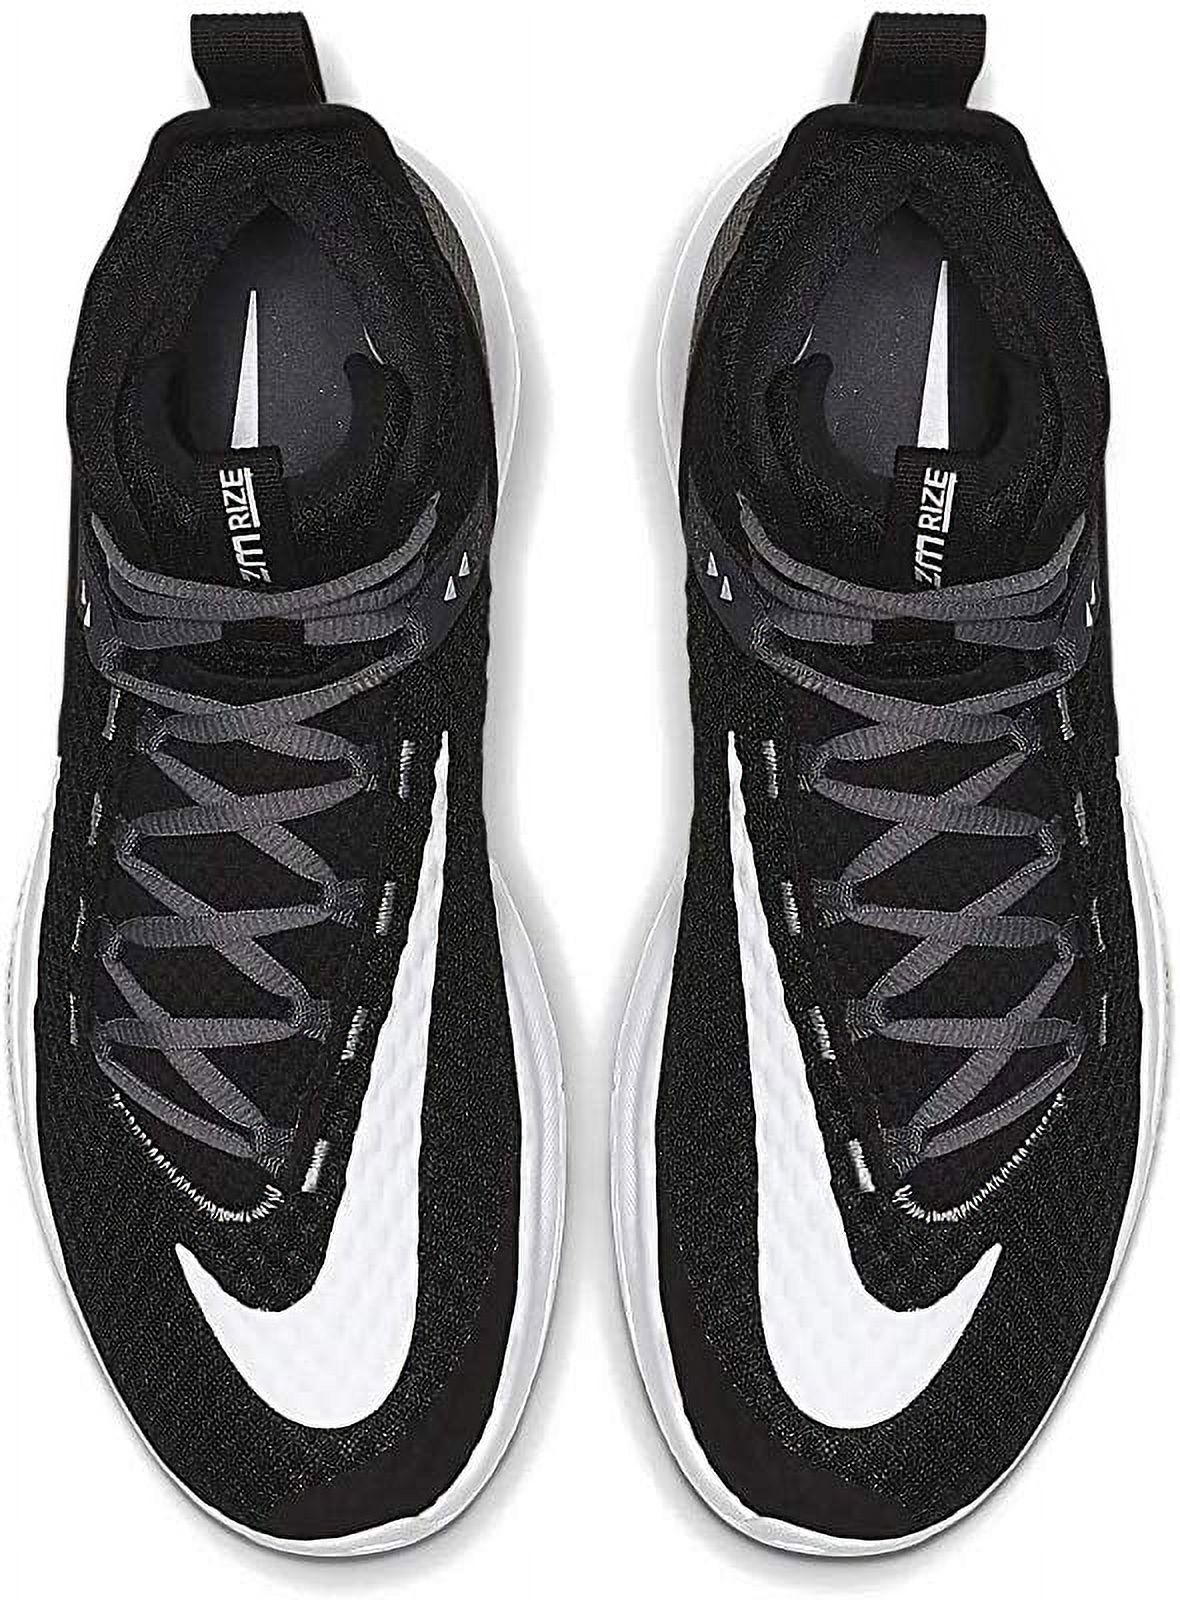 Nike Men's Zoom Rize TB Basketball Shoe, BQ5468-001 Black/White, 12 US - image 2 of 4